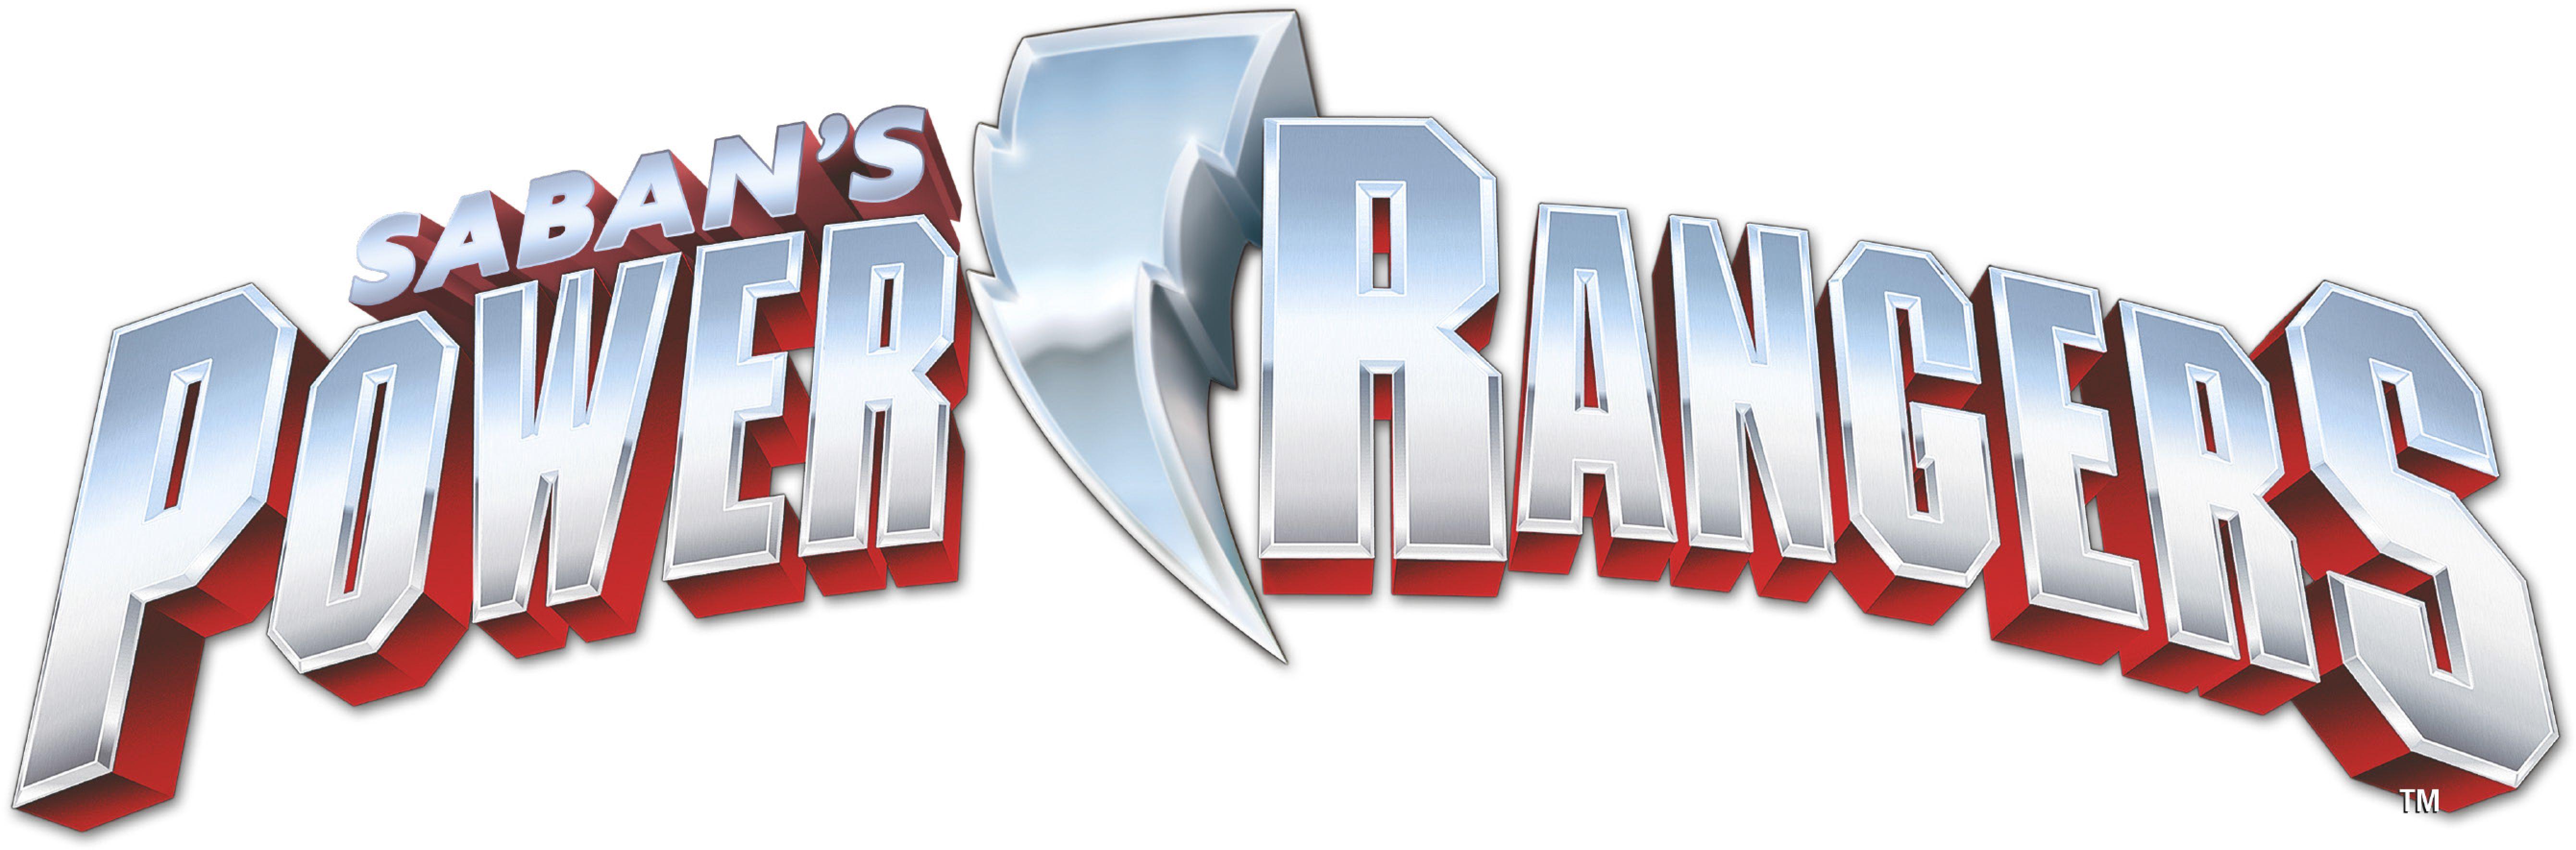 Saban Logo - Kidscreen Archive Dubai to host inaugural live Power Rangers